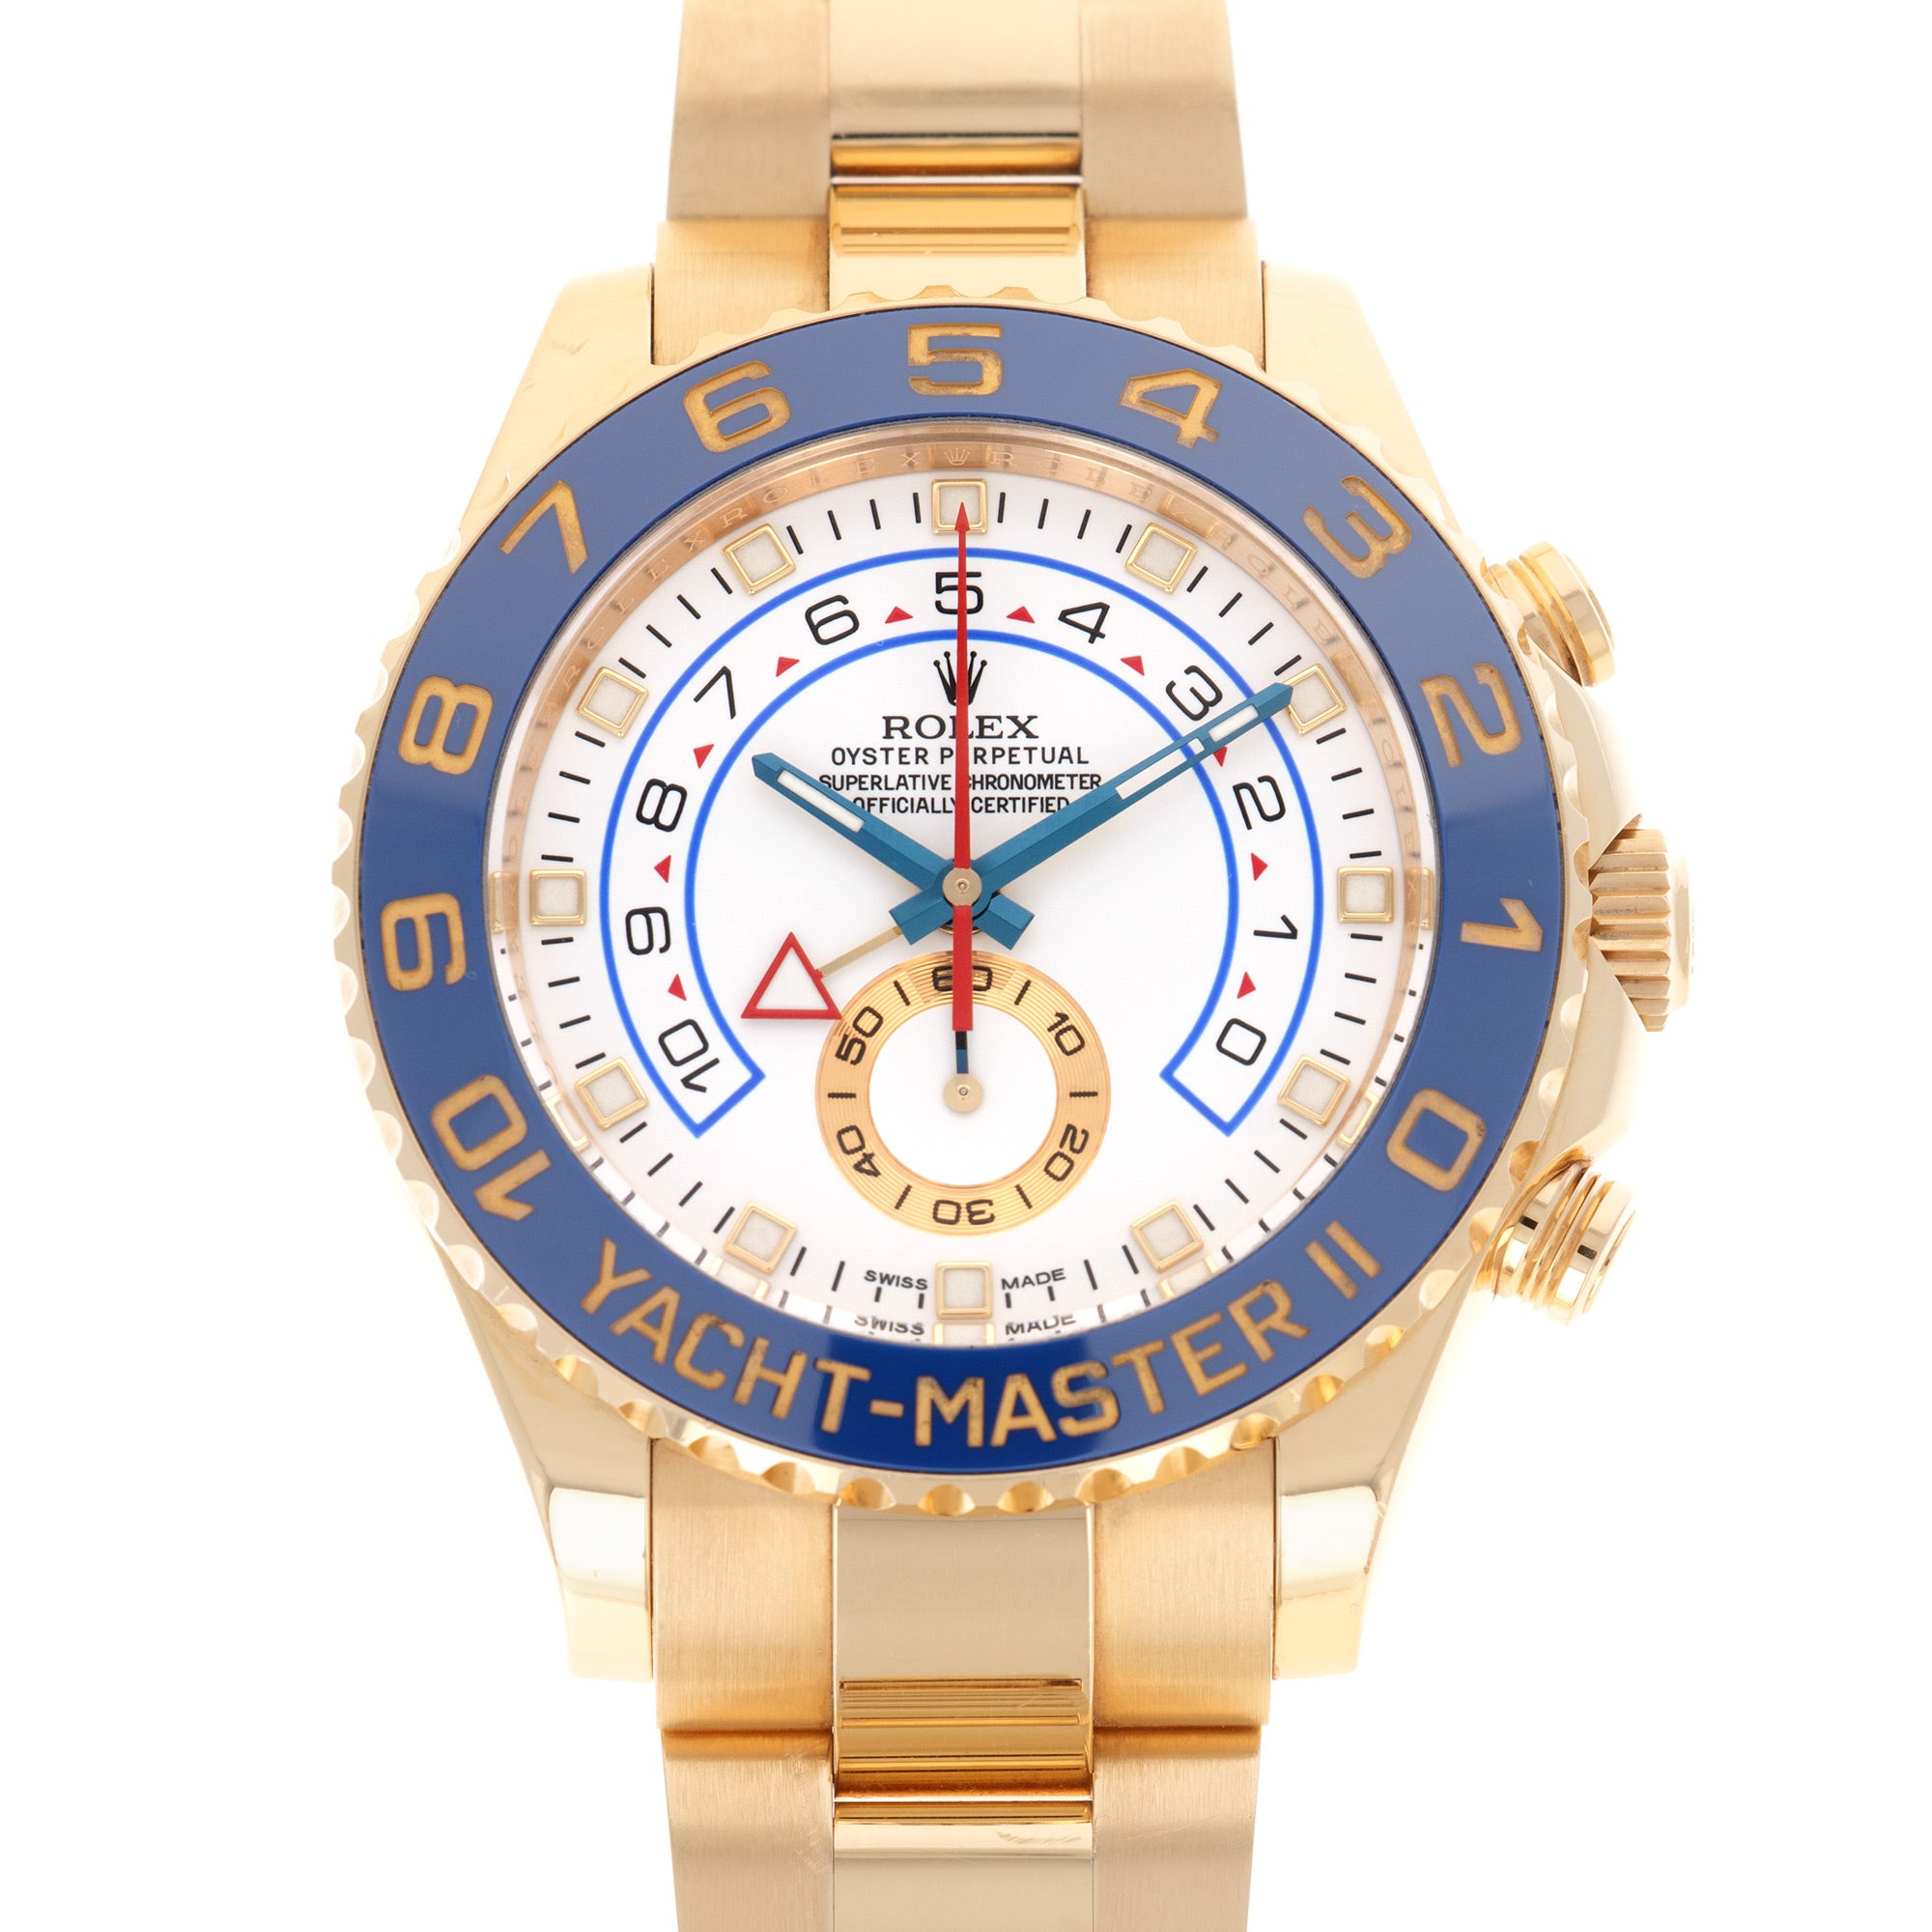 Rolex - Rolex Yellow Gold Yacht-Master II Watch Ref. 116688 - The Keystone Watches